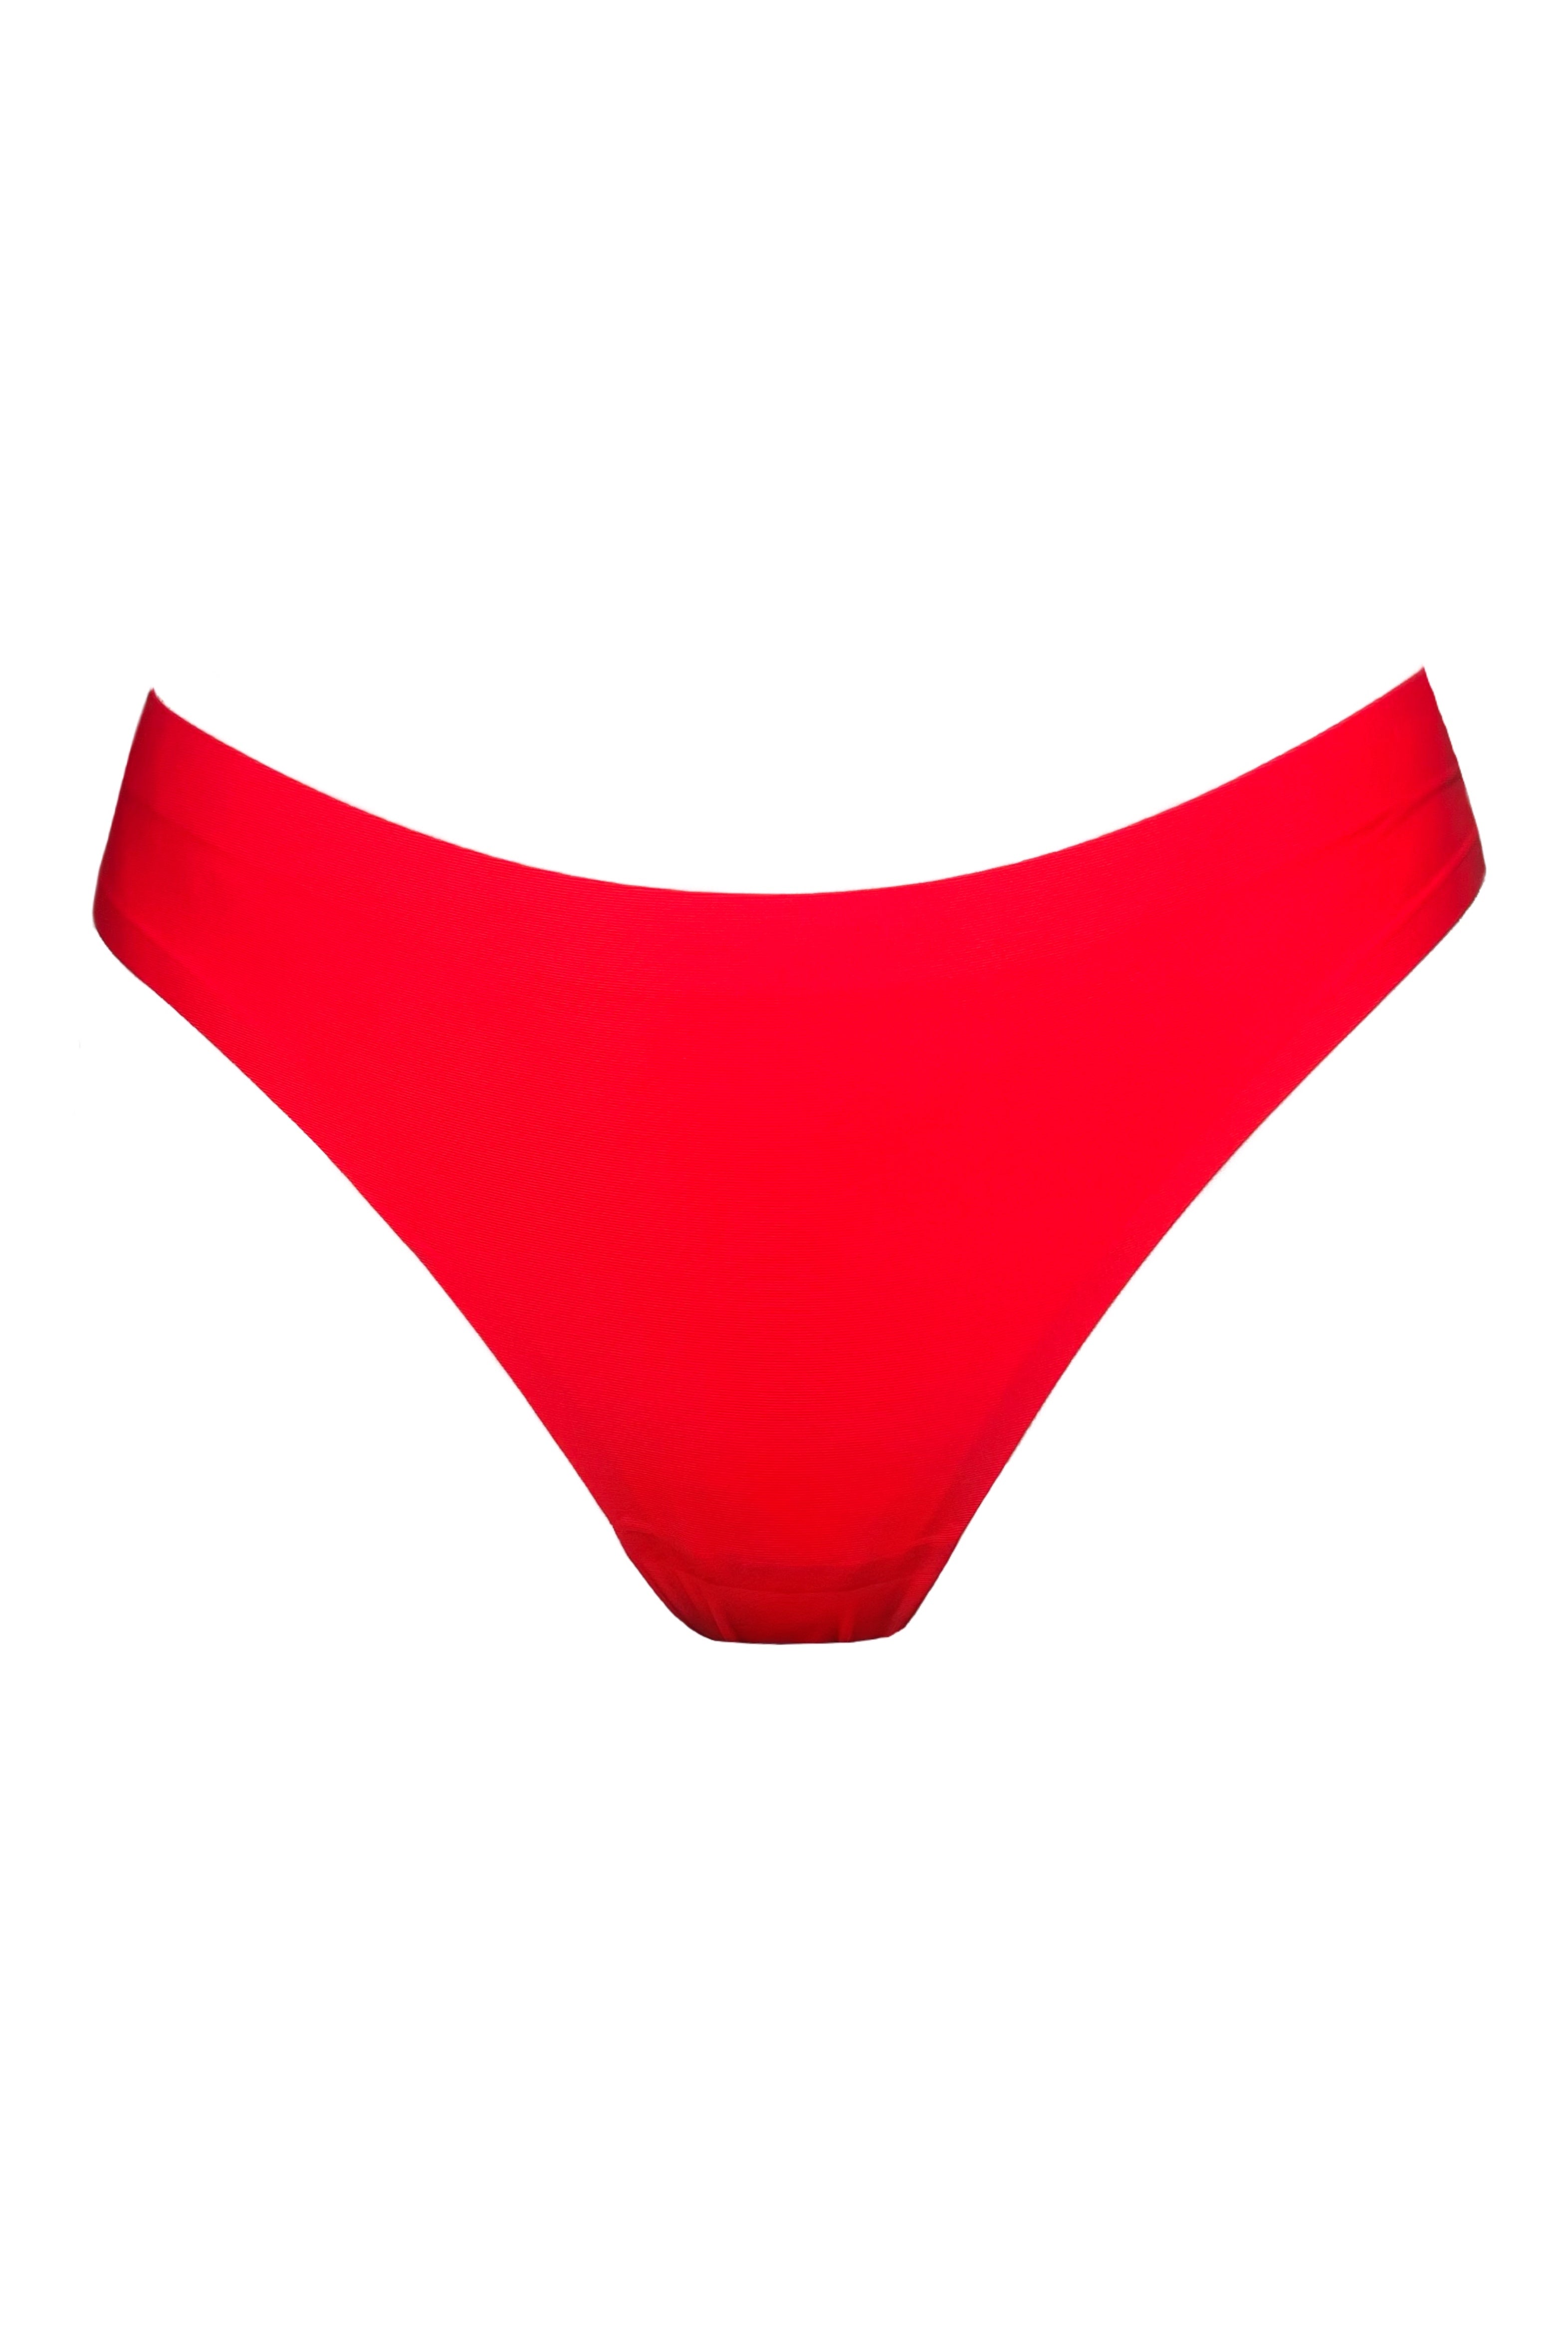 Lucy red seamless brazilian panties